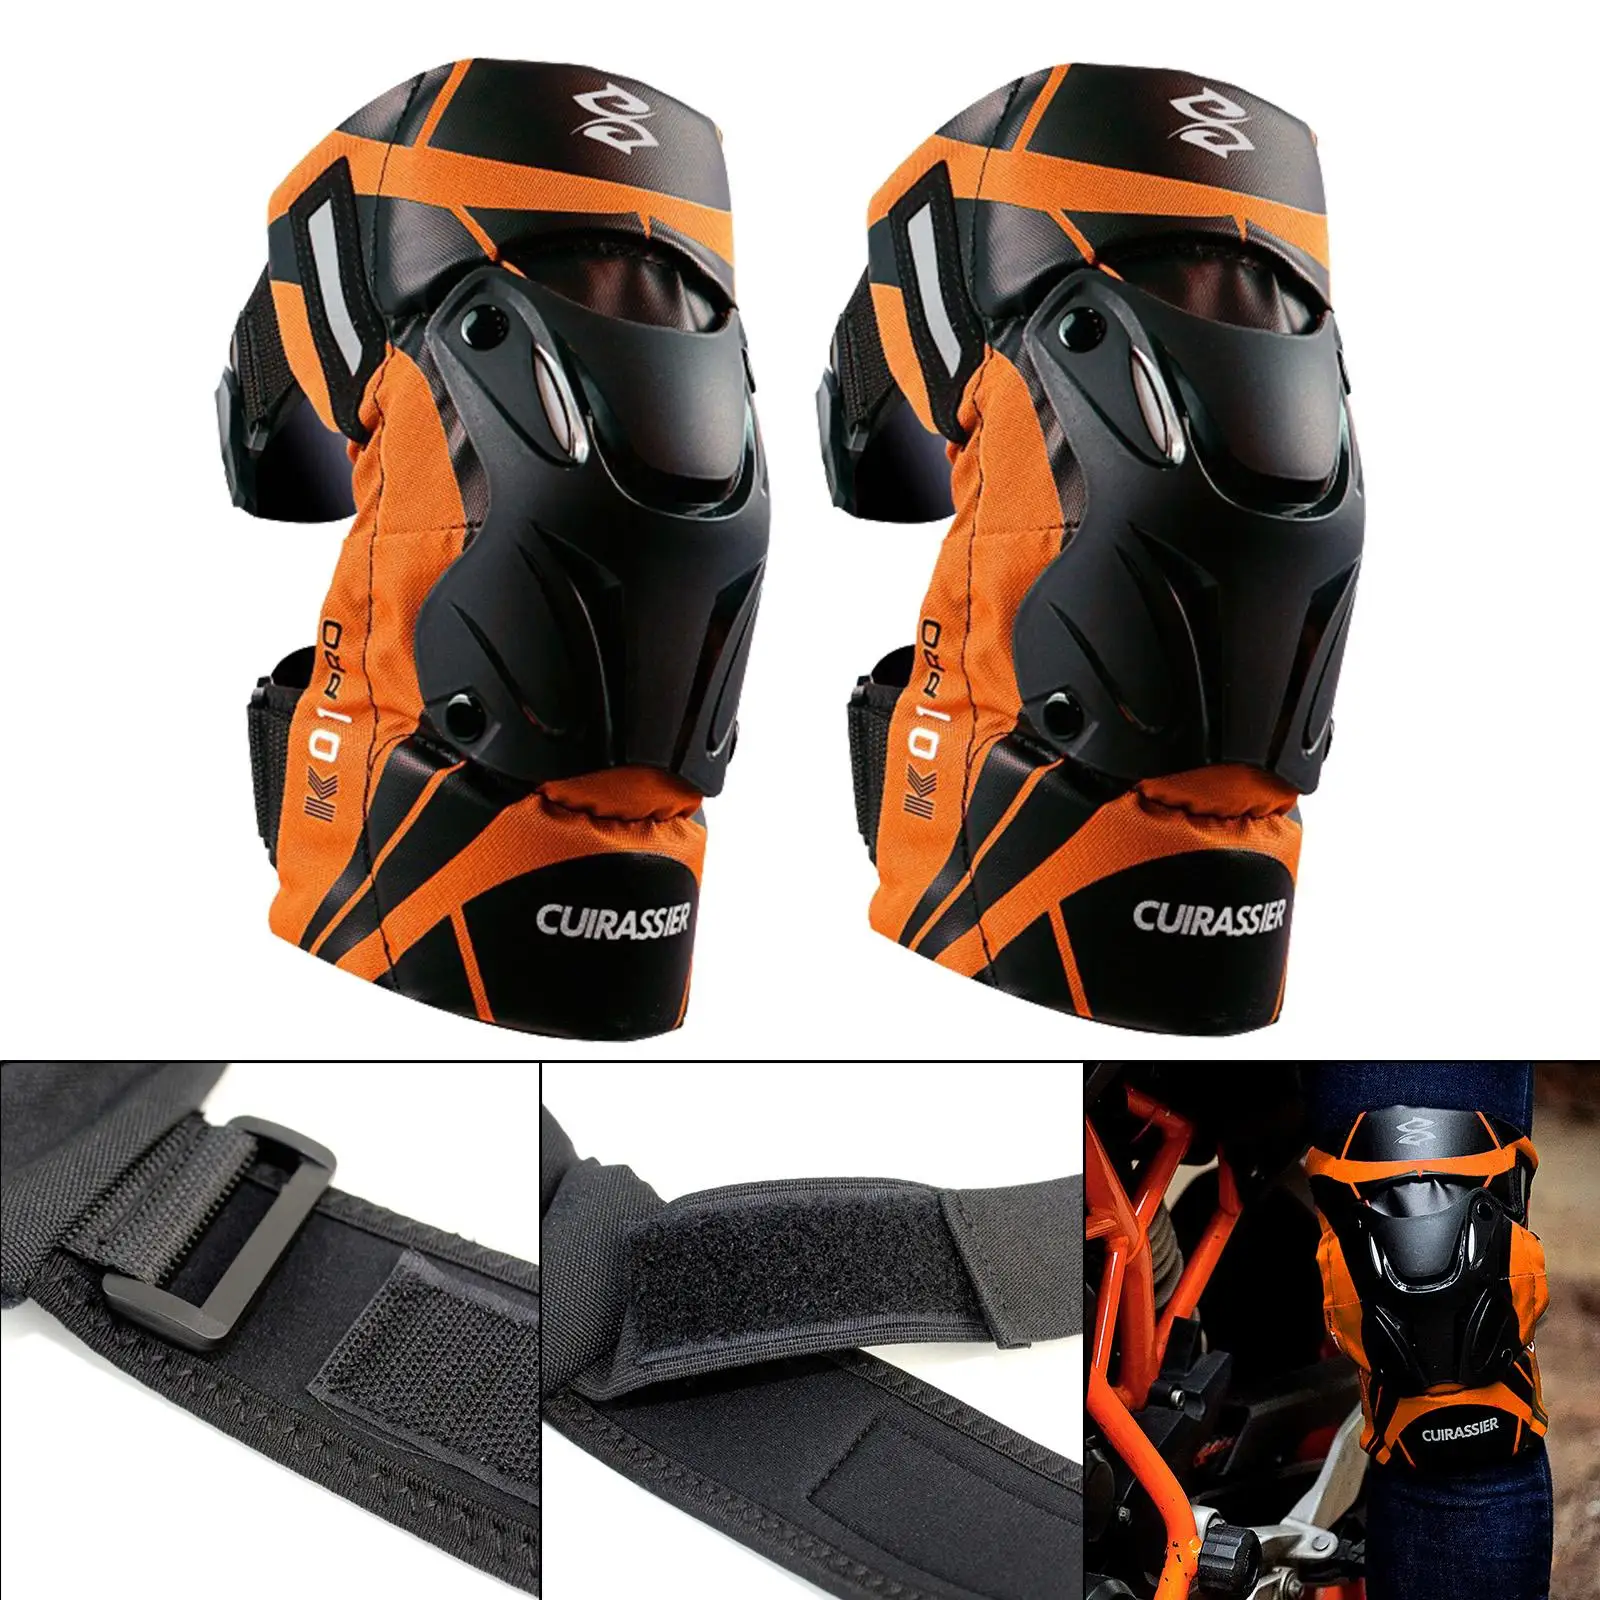 2x Motorcycle Knee Pads Adjustable for Motocross Racing Unisex